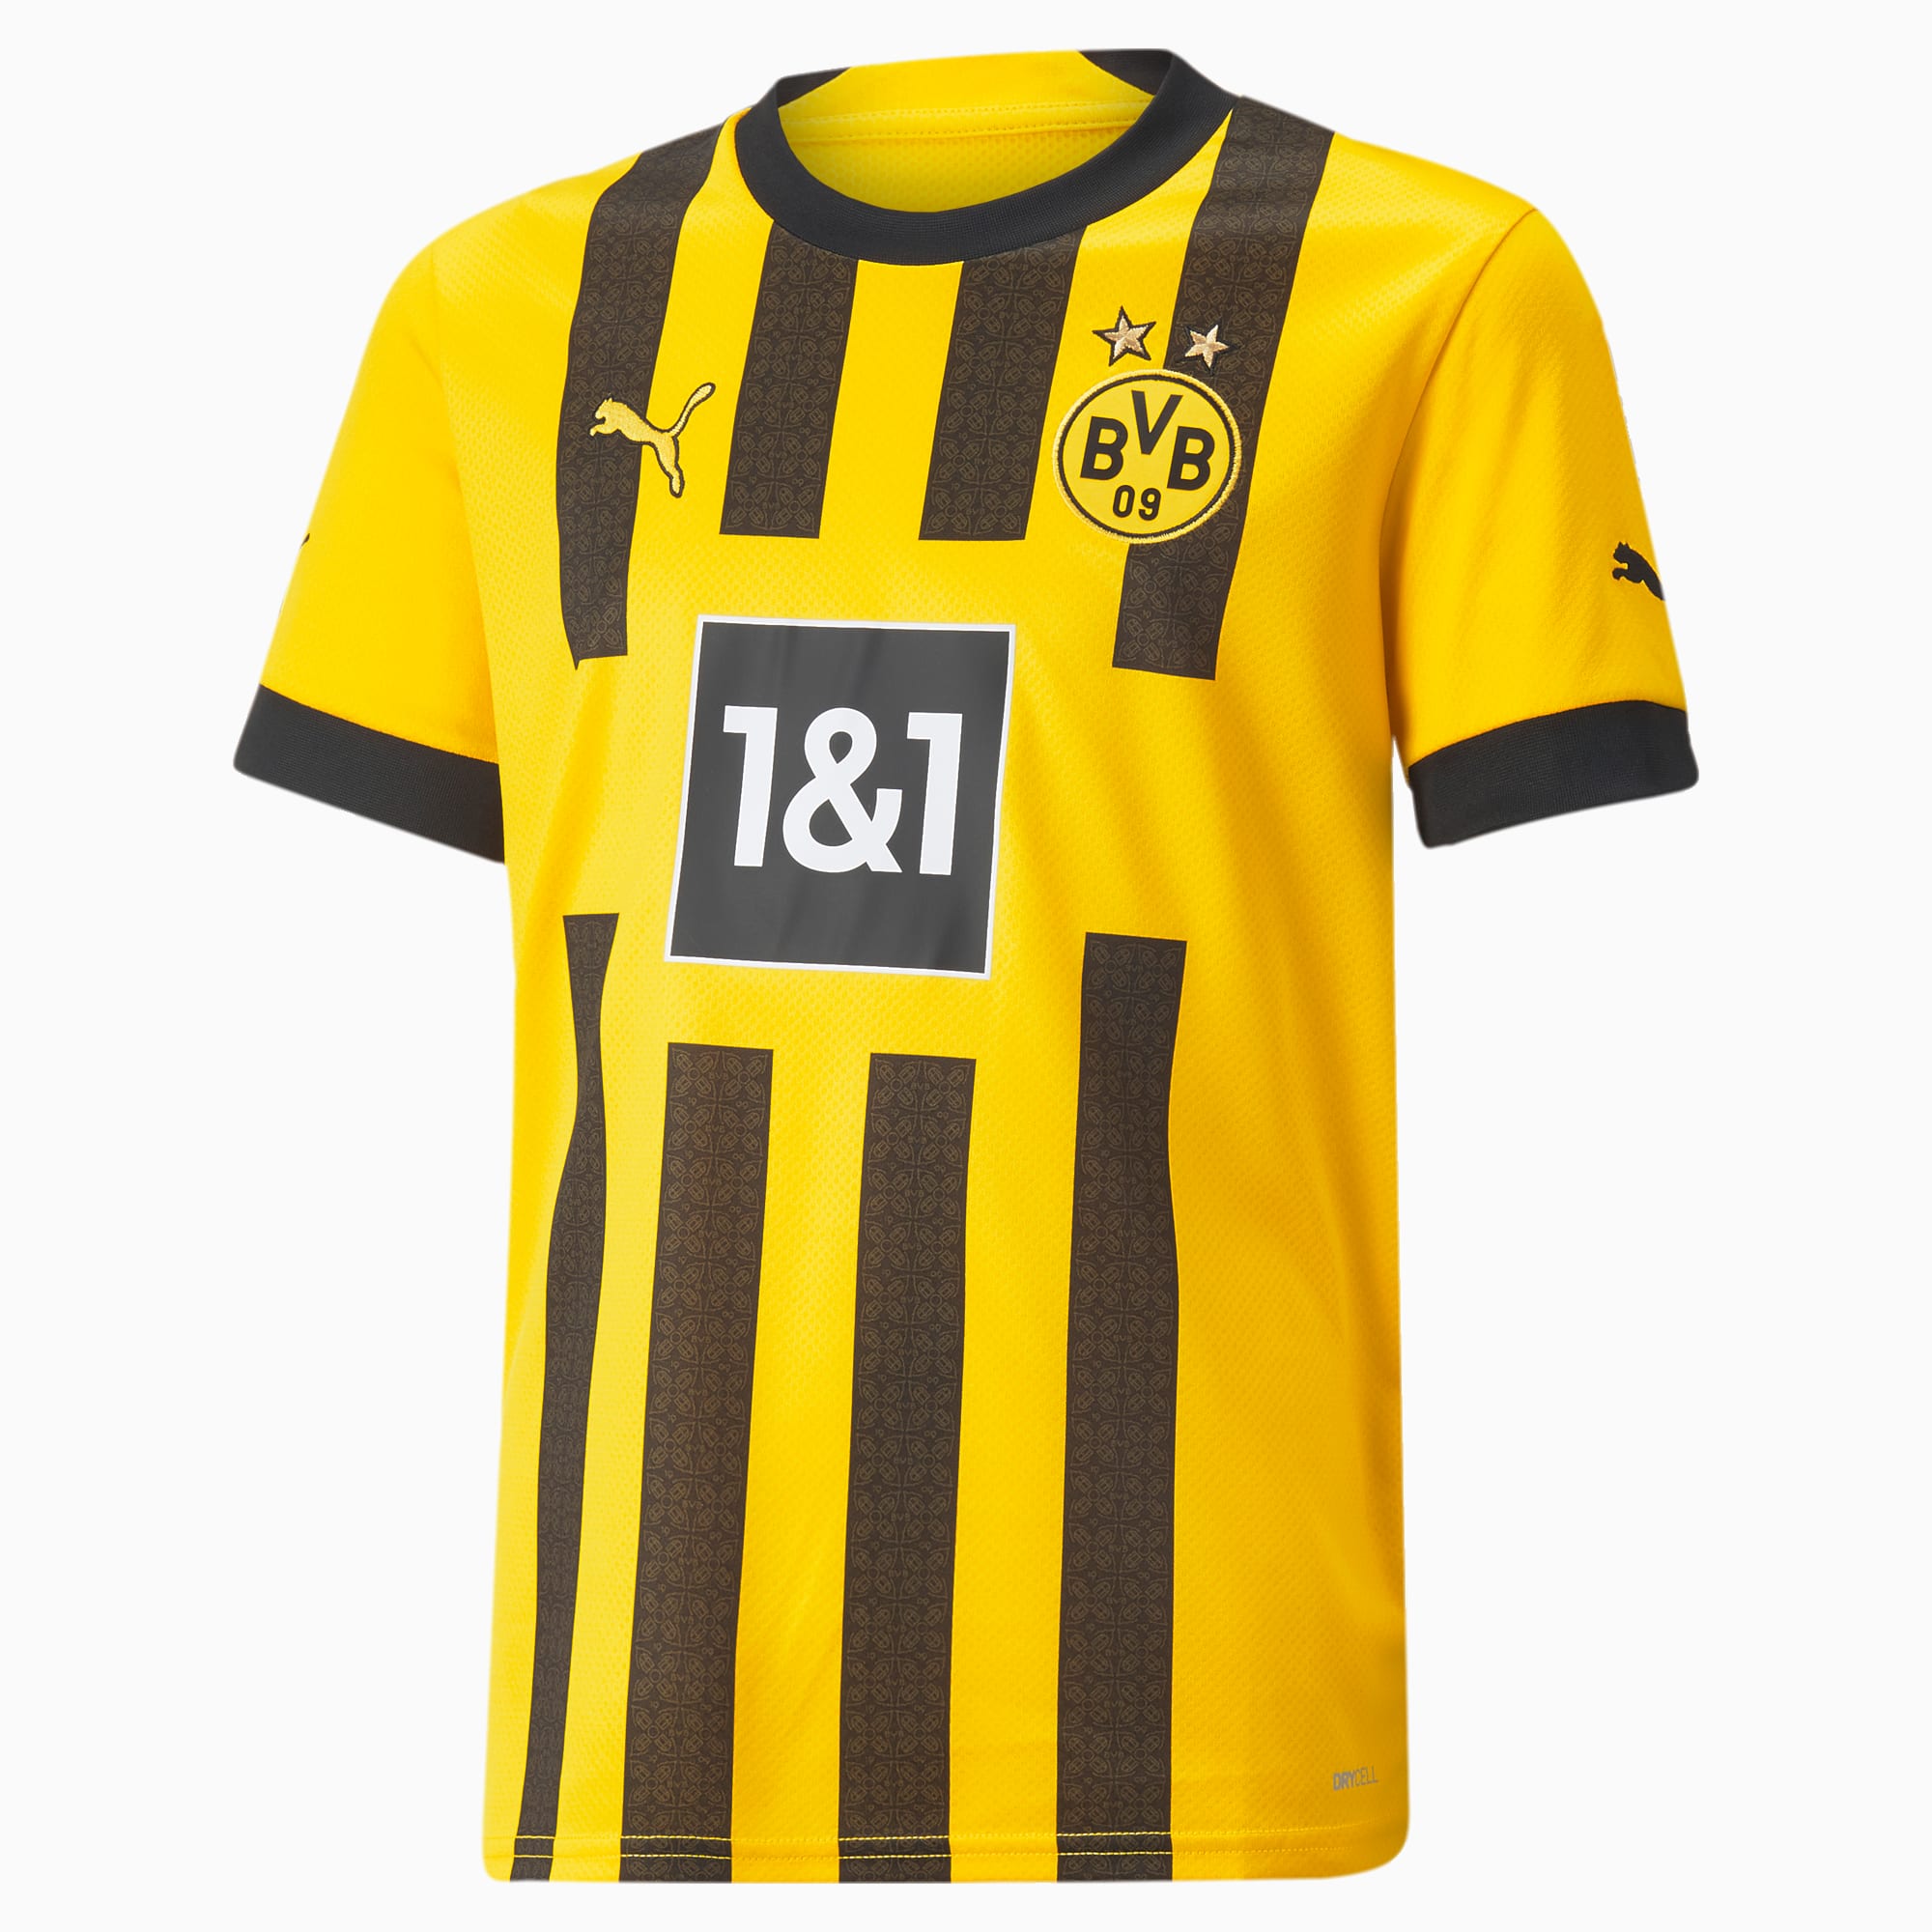 Gecomprimeerd Lijkt op eigendom stefanssoccer.com:Puma Youth Dortmund 22/23 Home Jersey - Yellow / Black